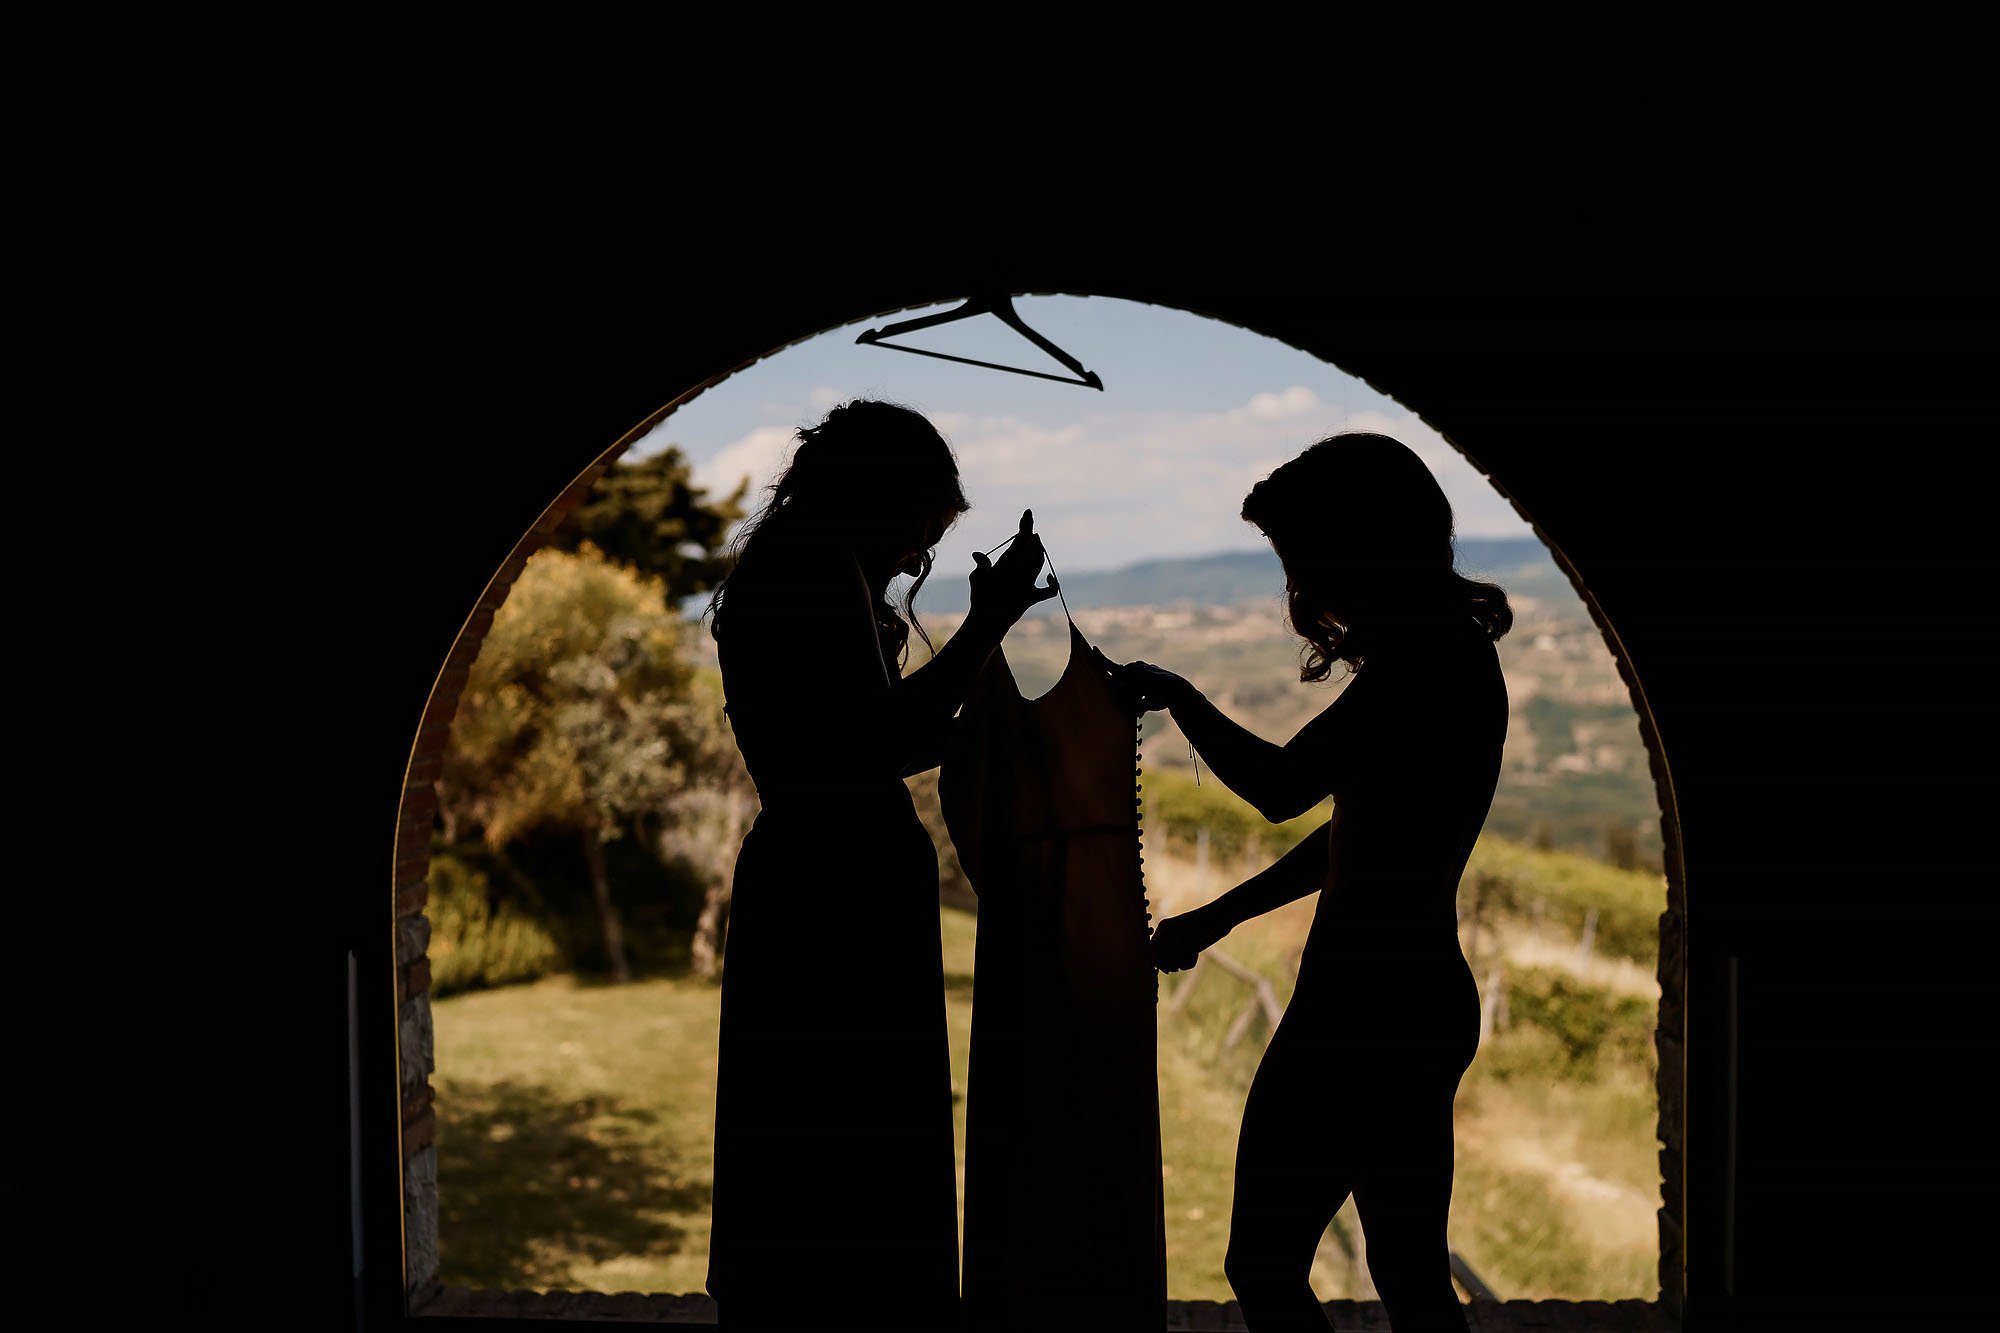 Tuscan vineyard wedding le filigare italy - arj photography®